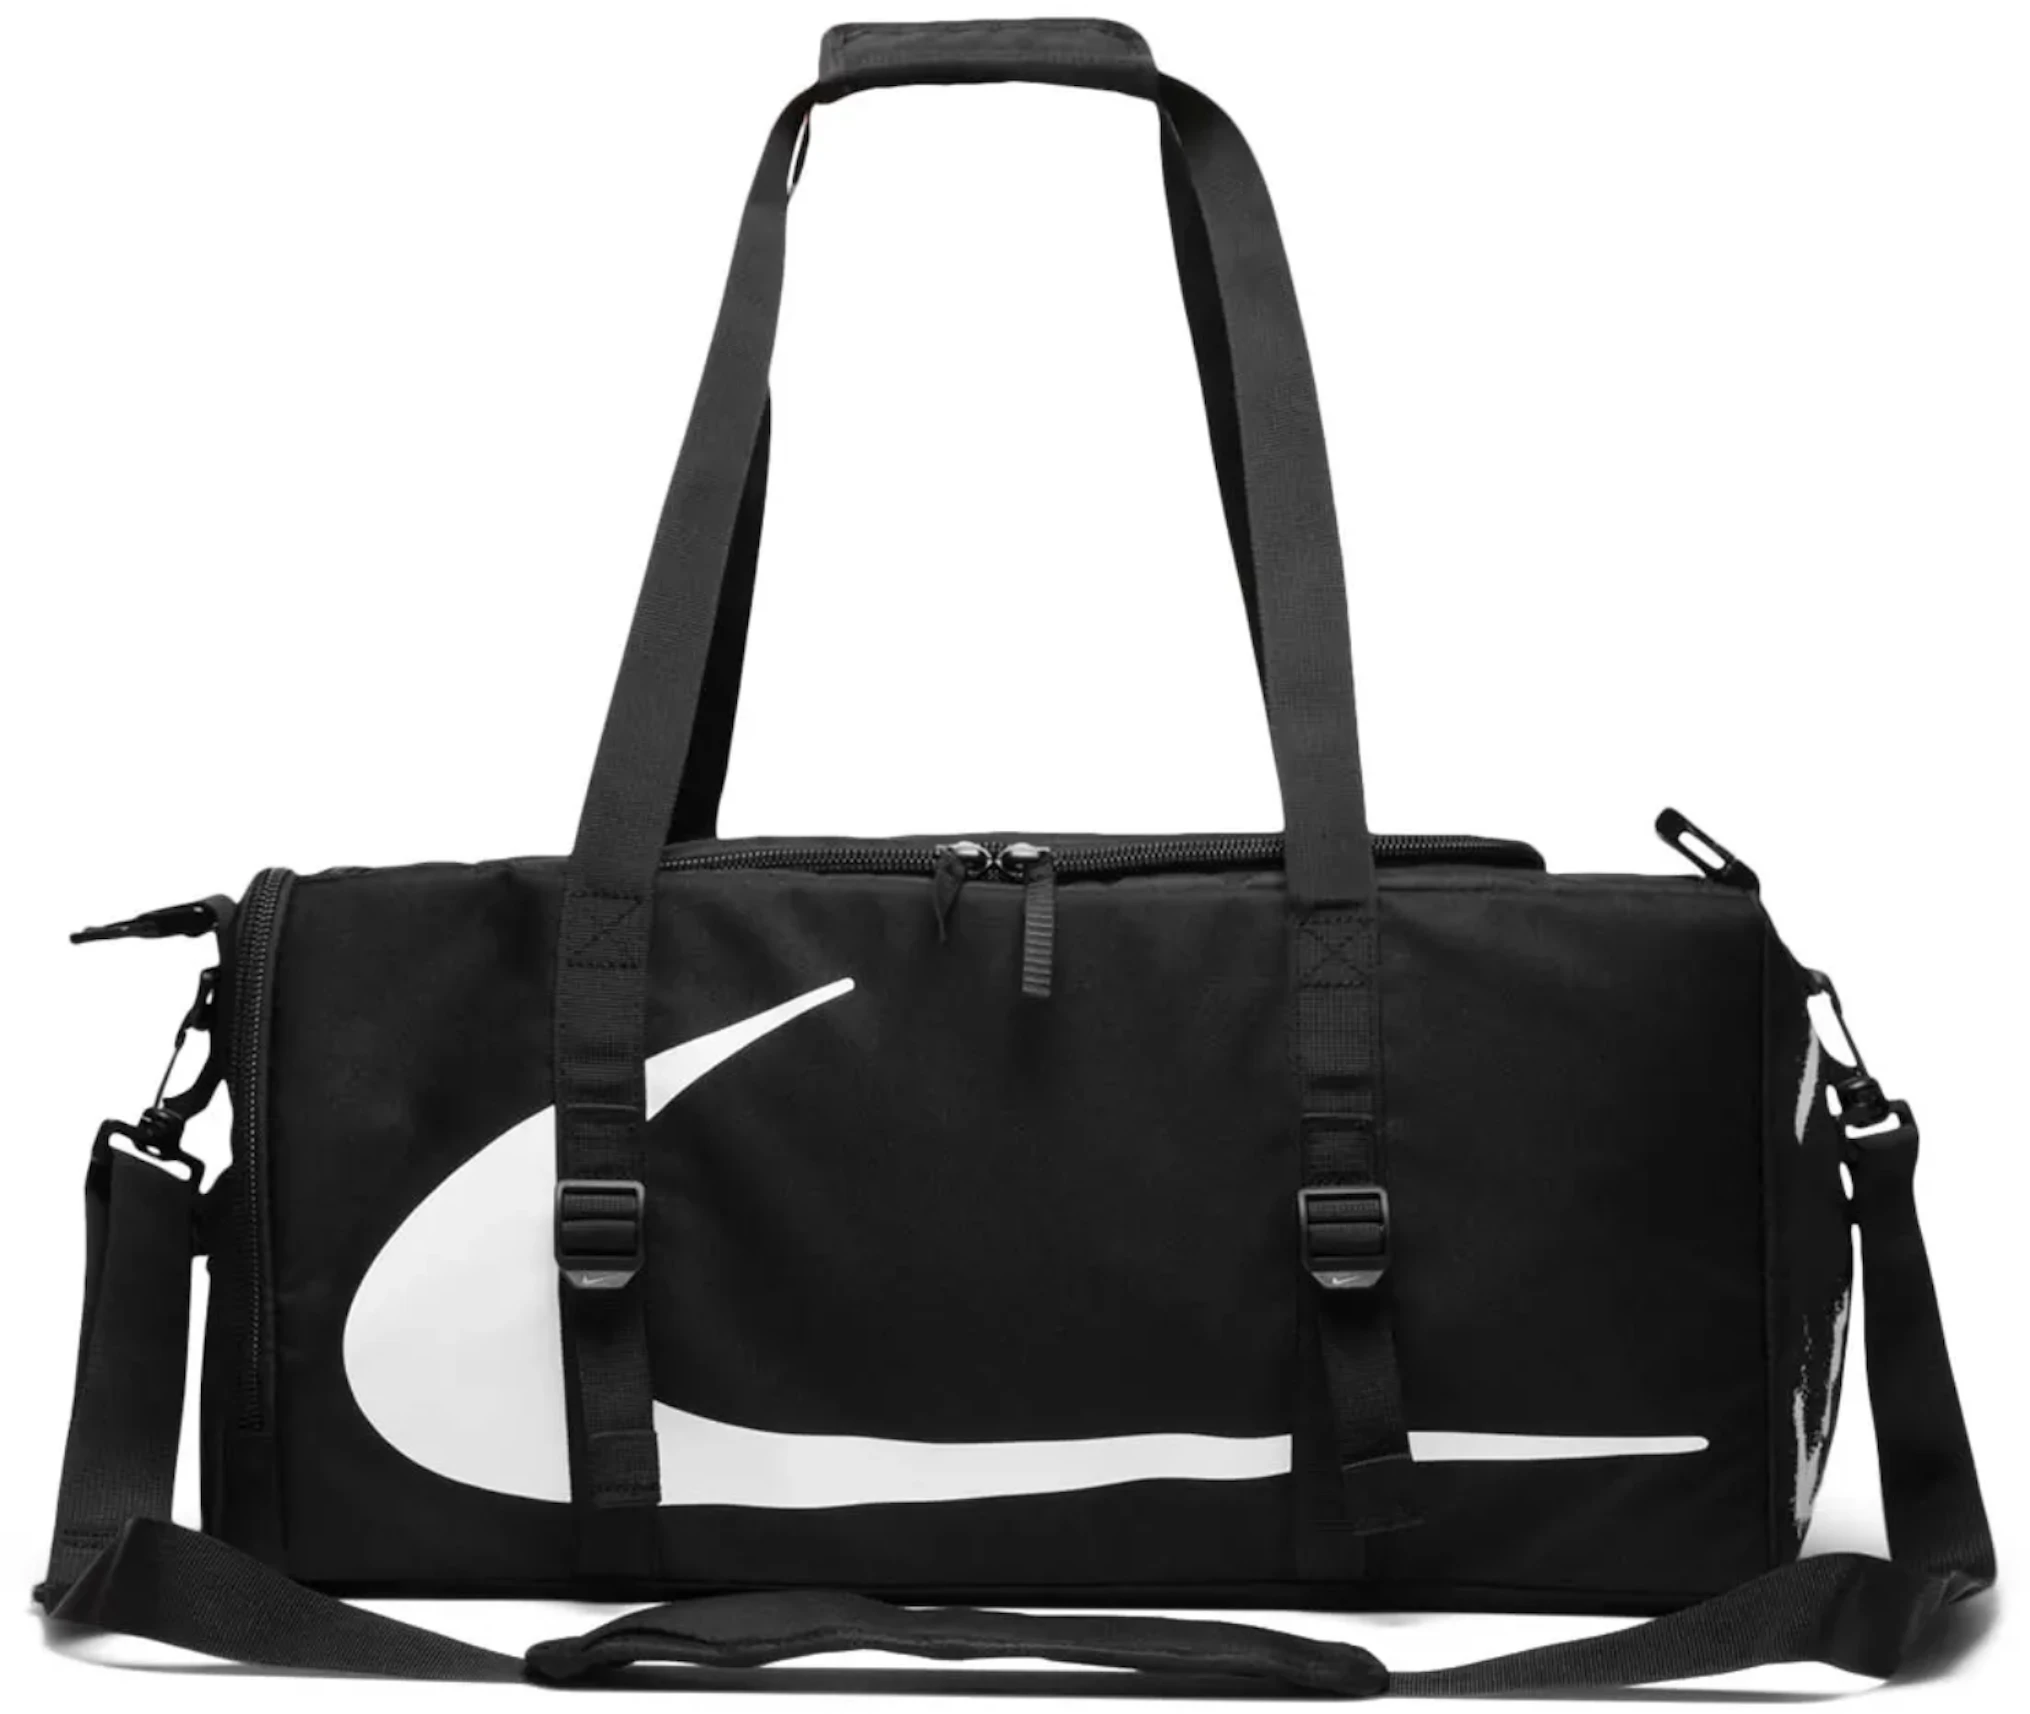 White Nike Duffle Bag | vlr.eng.br